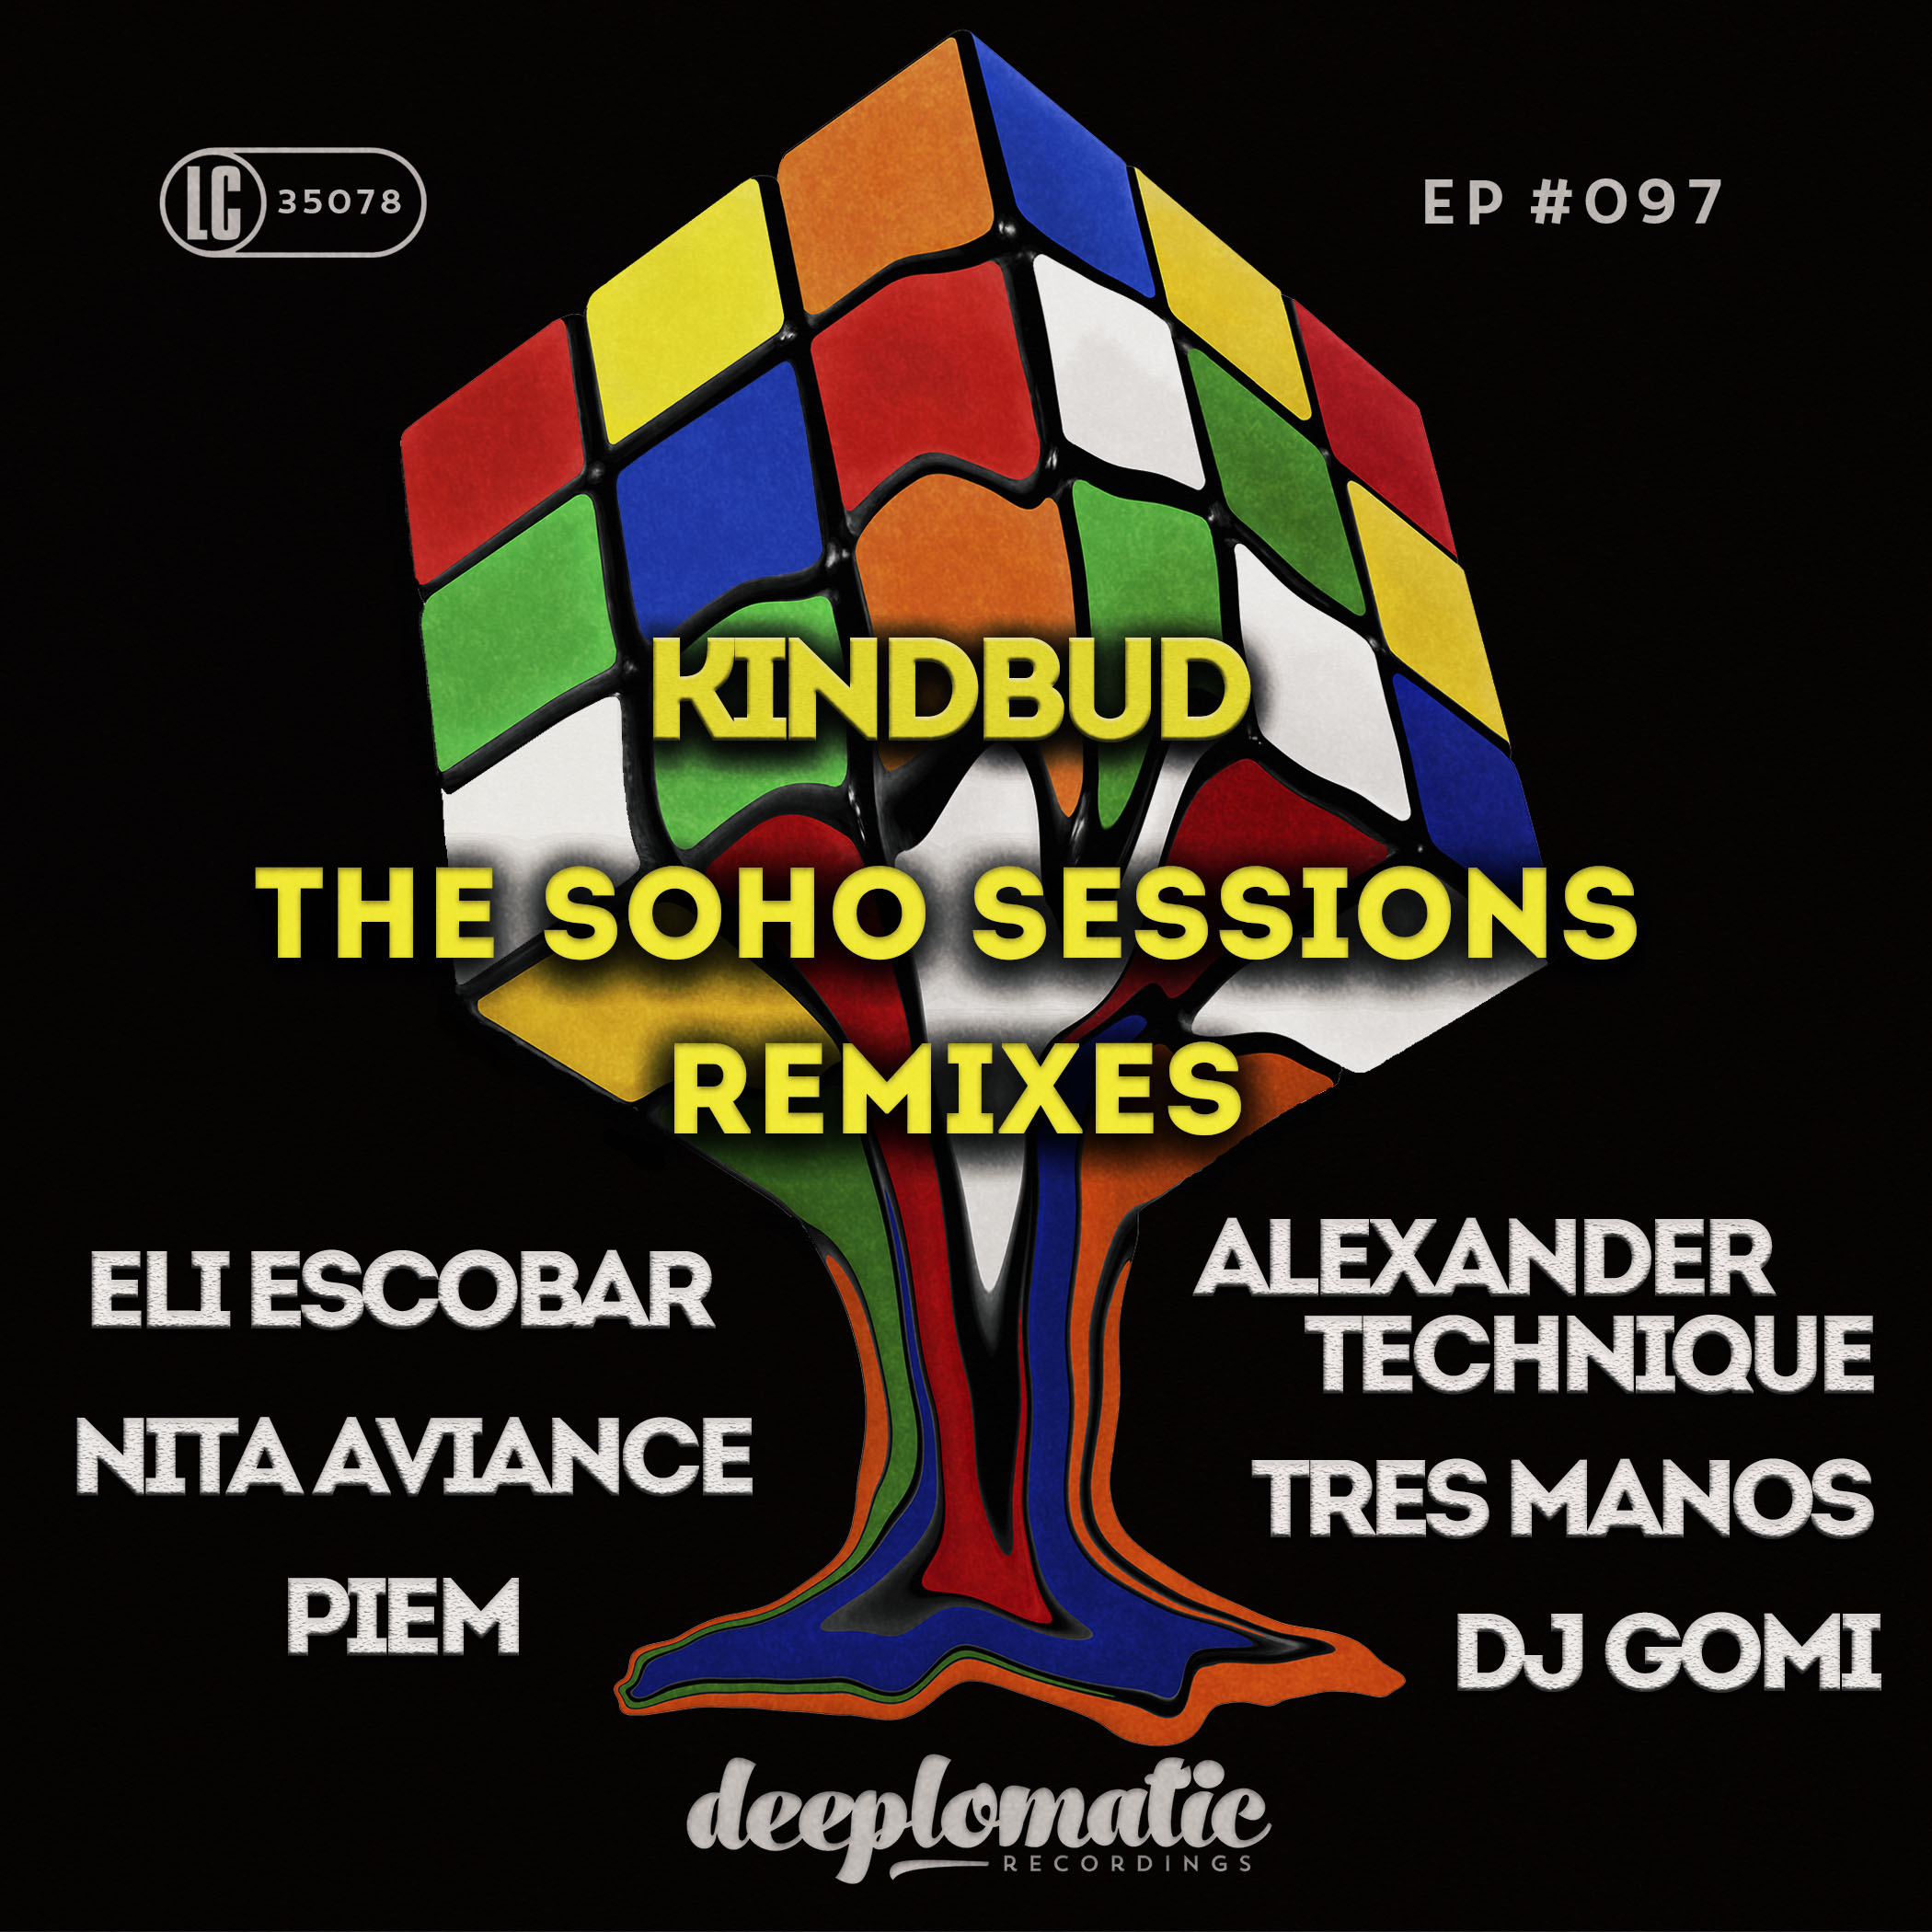 The Soho Sessions Remixes